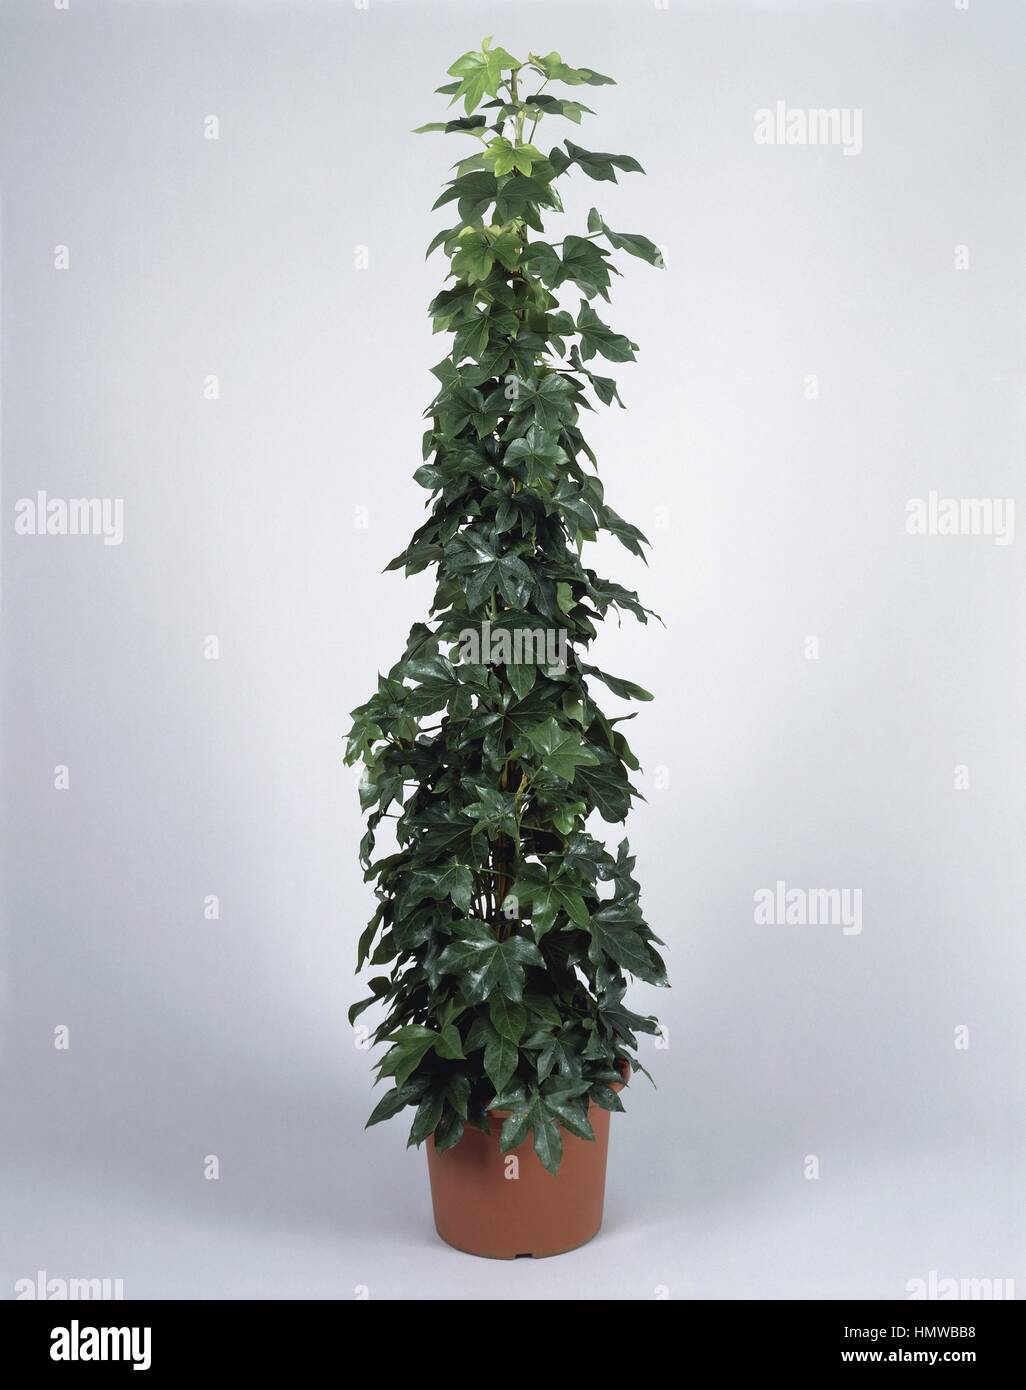 Houseplants - Araliaceae - Tree ivy (Fatshedera lizei) Stock Photo